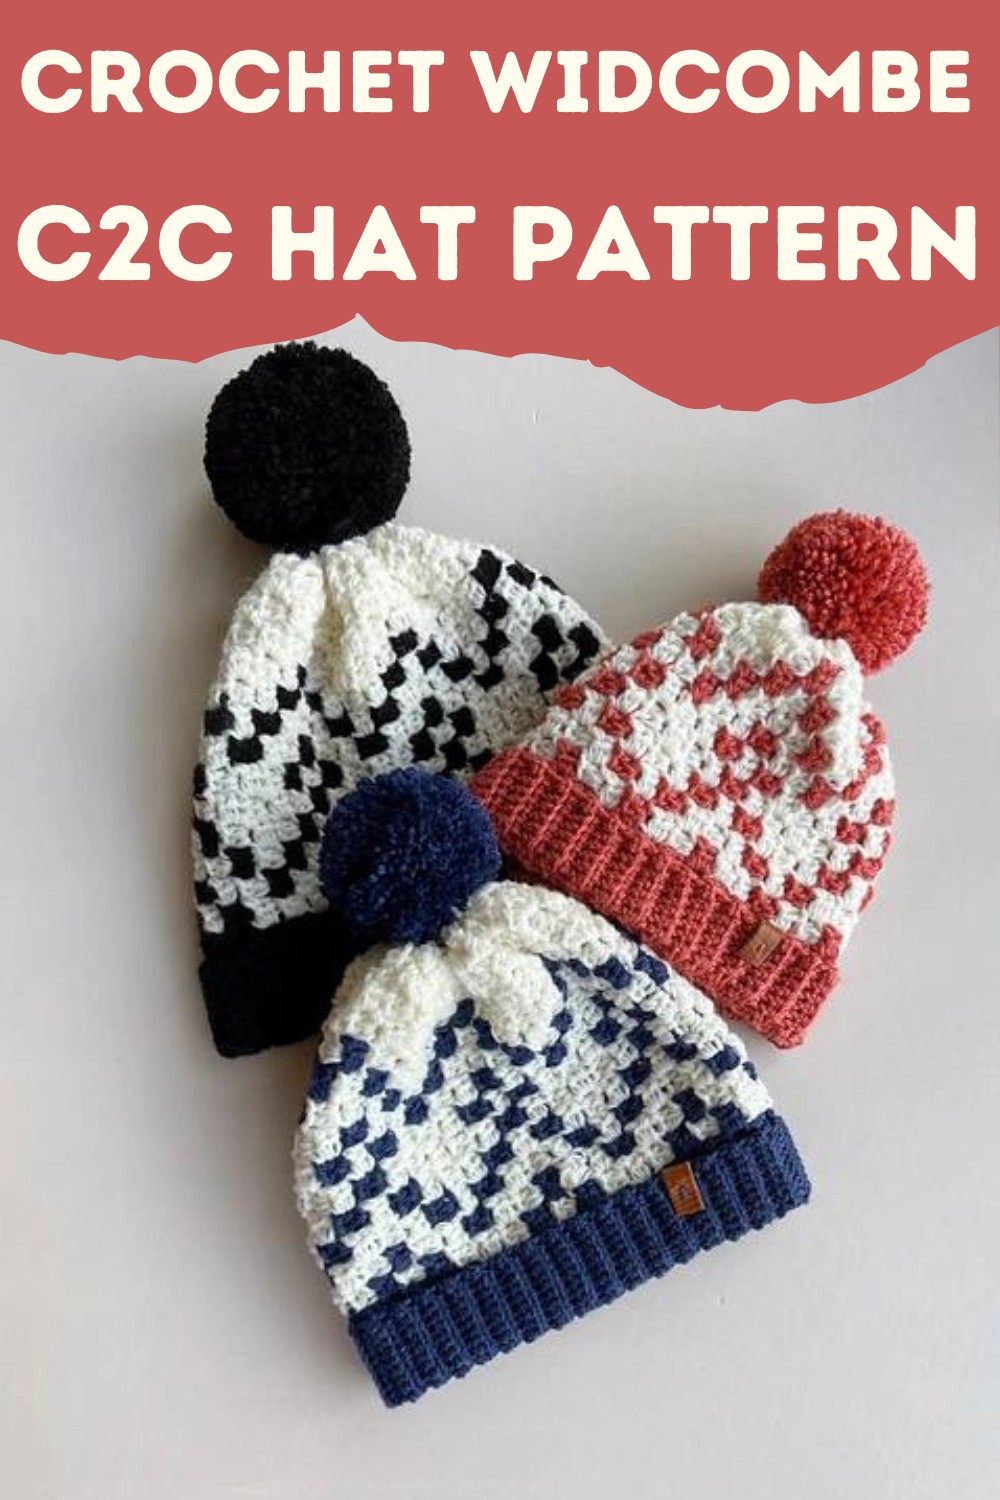 Crochet Widcombe C2c Hat Pattern